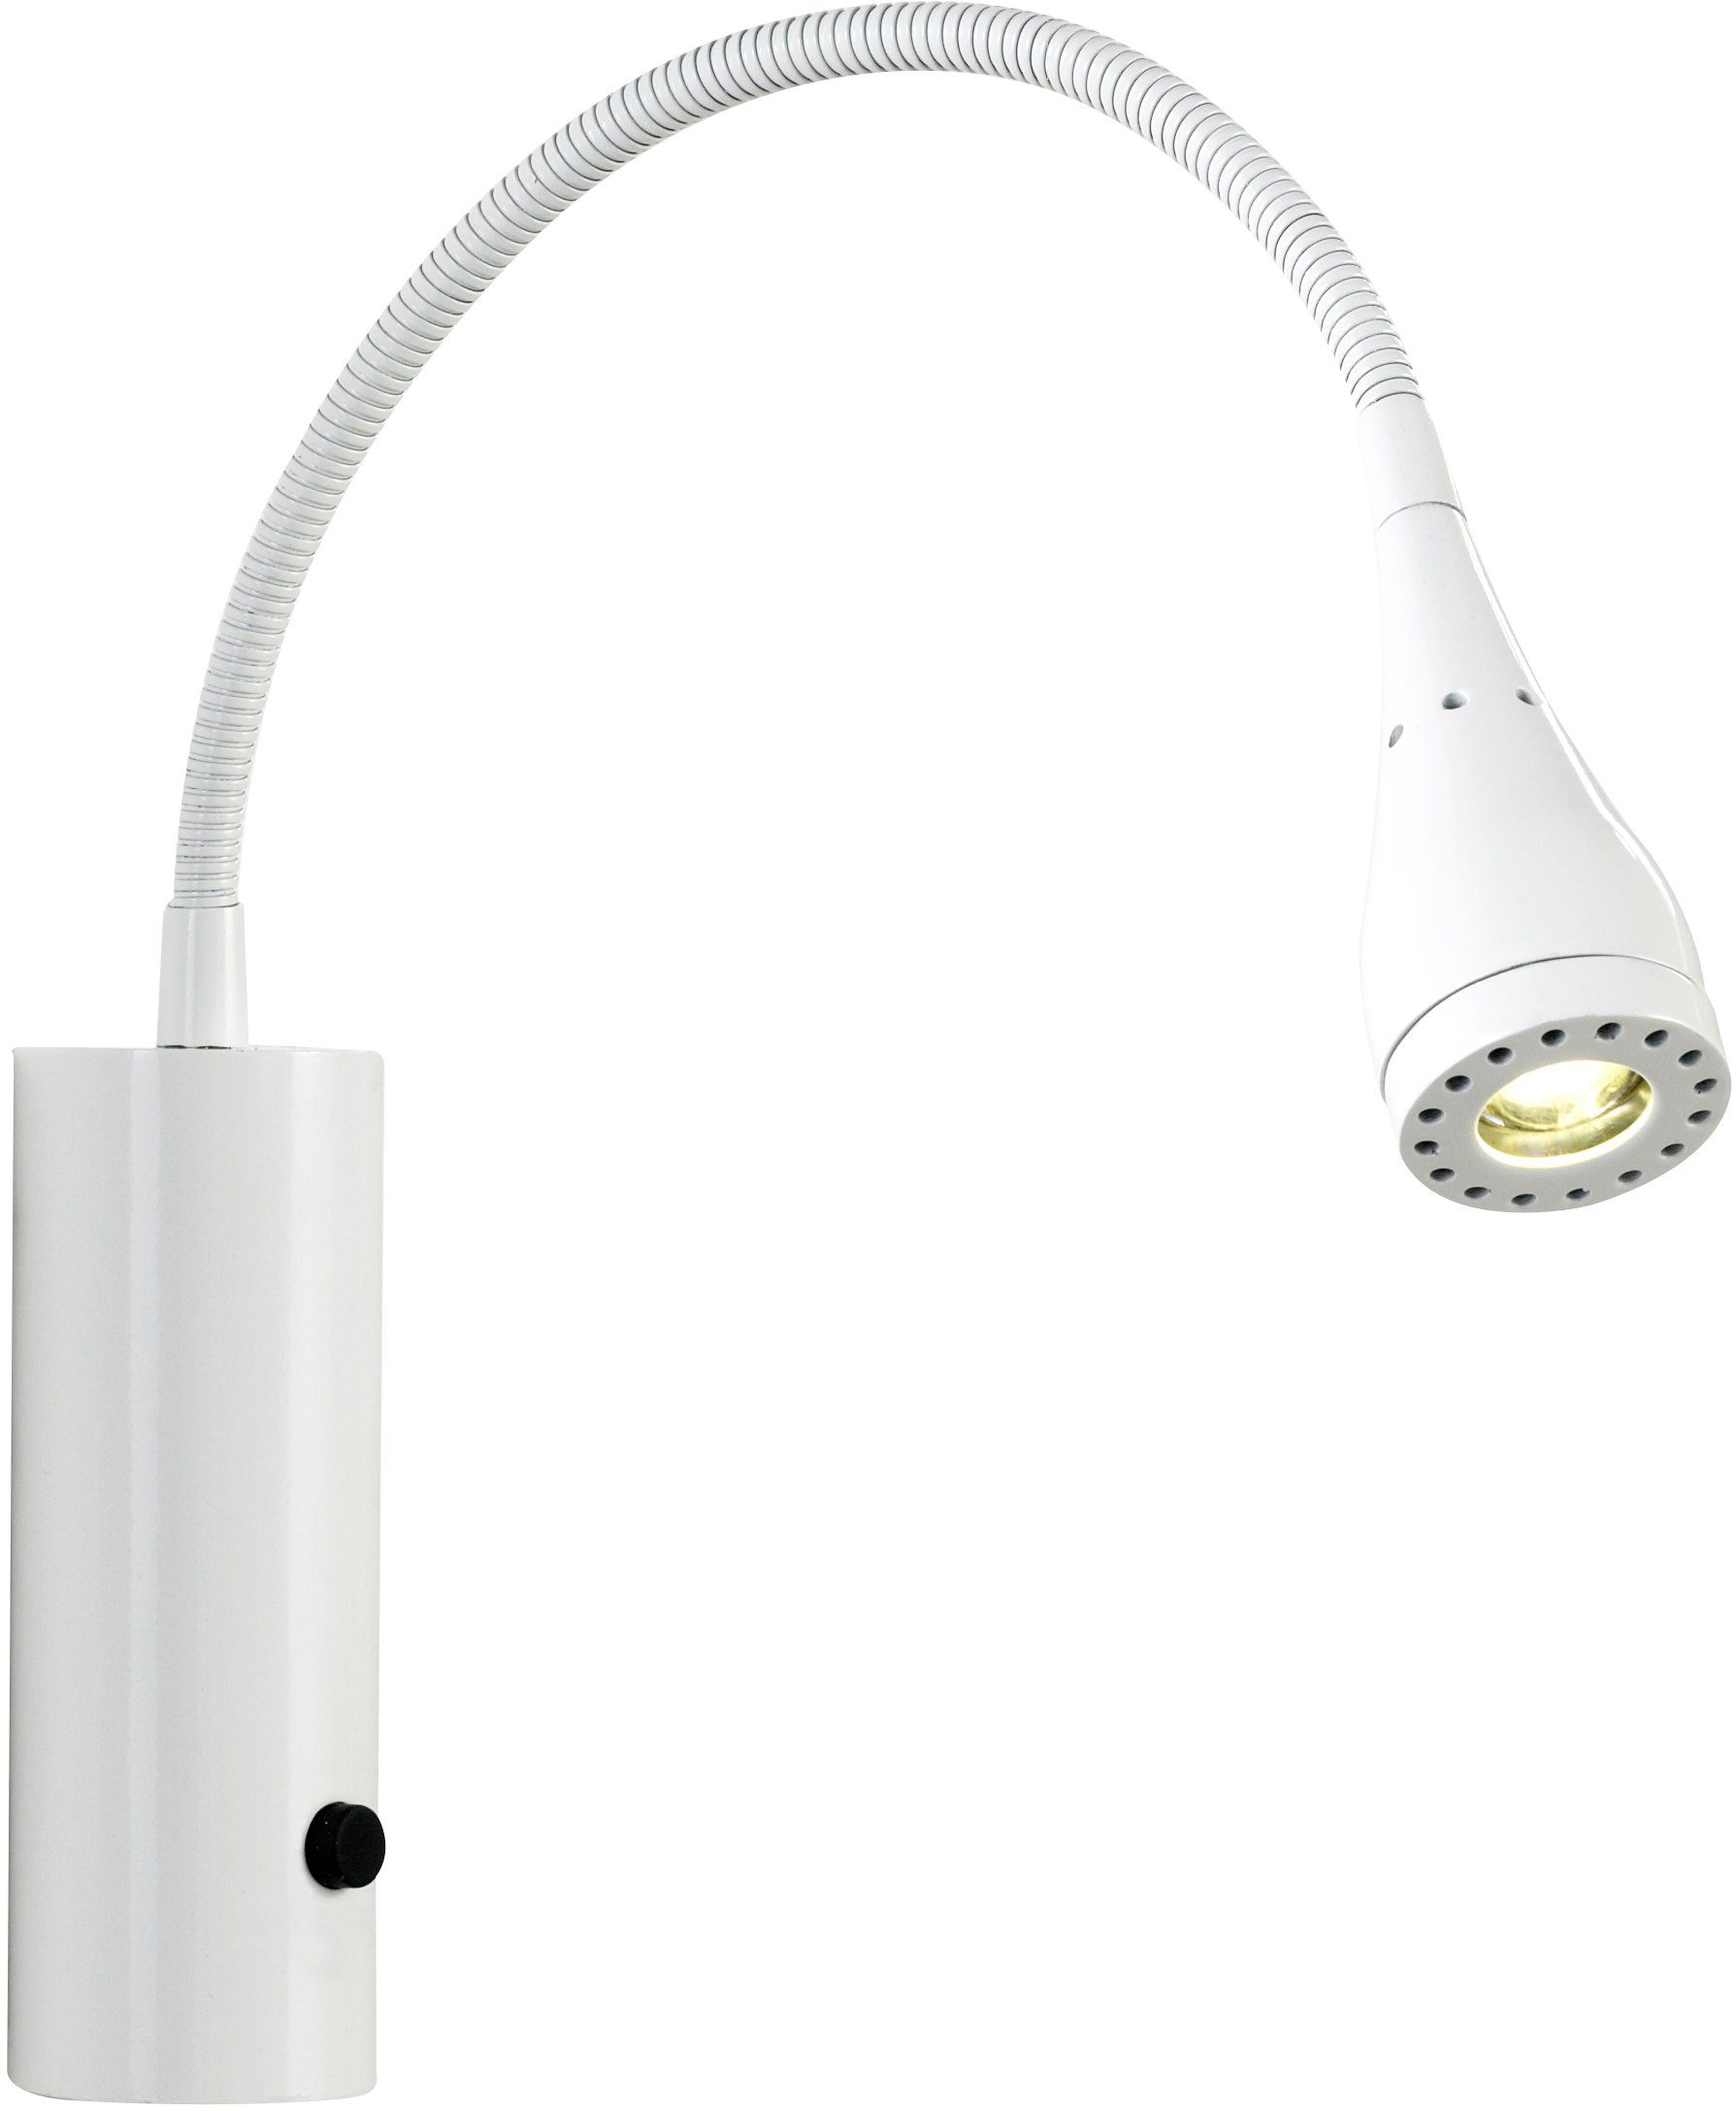 Nordlux LED Leselampe Mento, LED fest integriert, Warmweiß